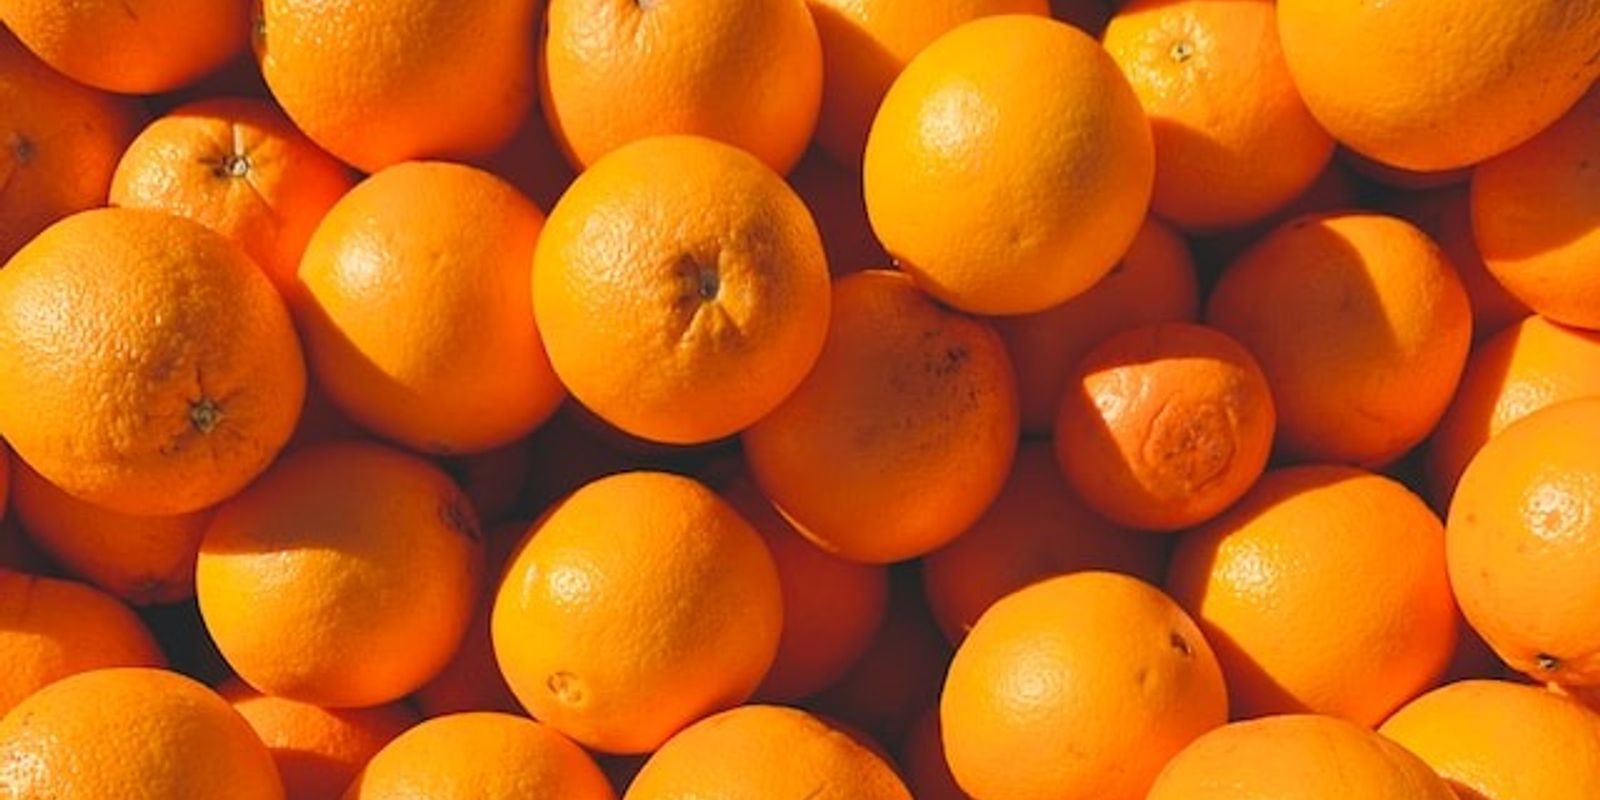 Pakistan Fresh Orange market overview 2023